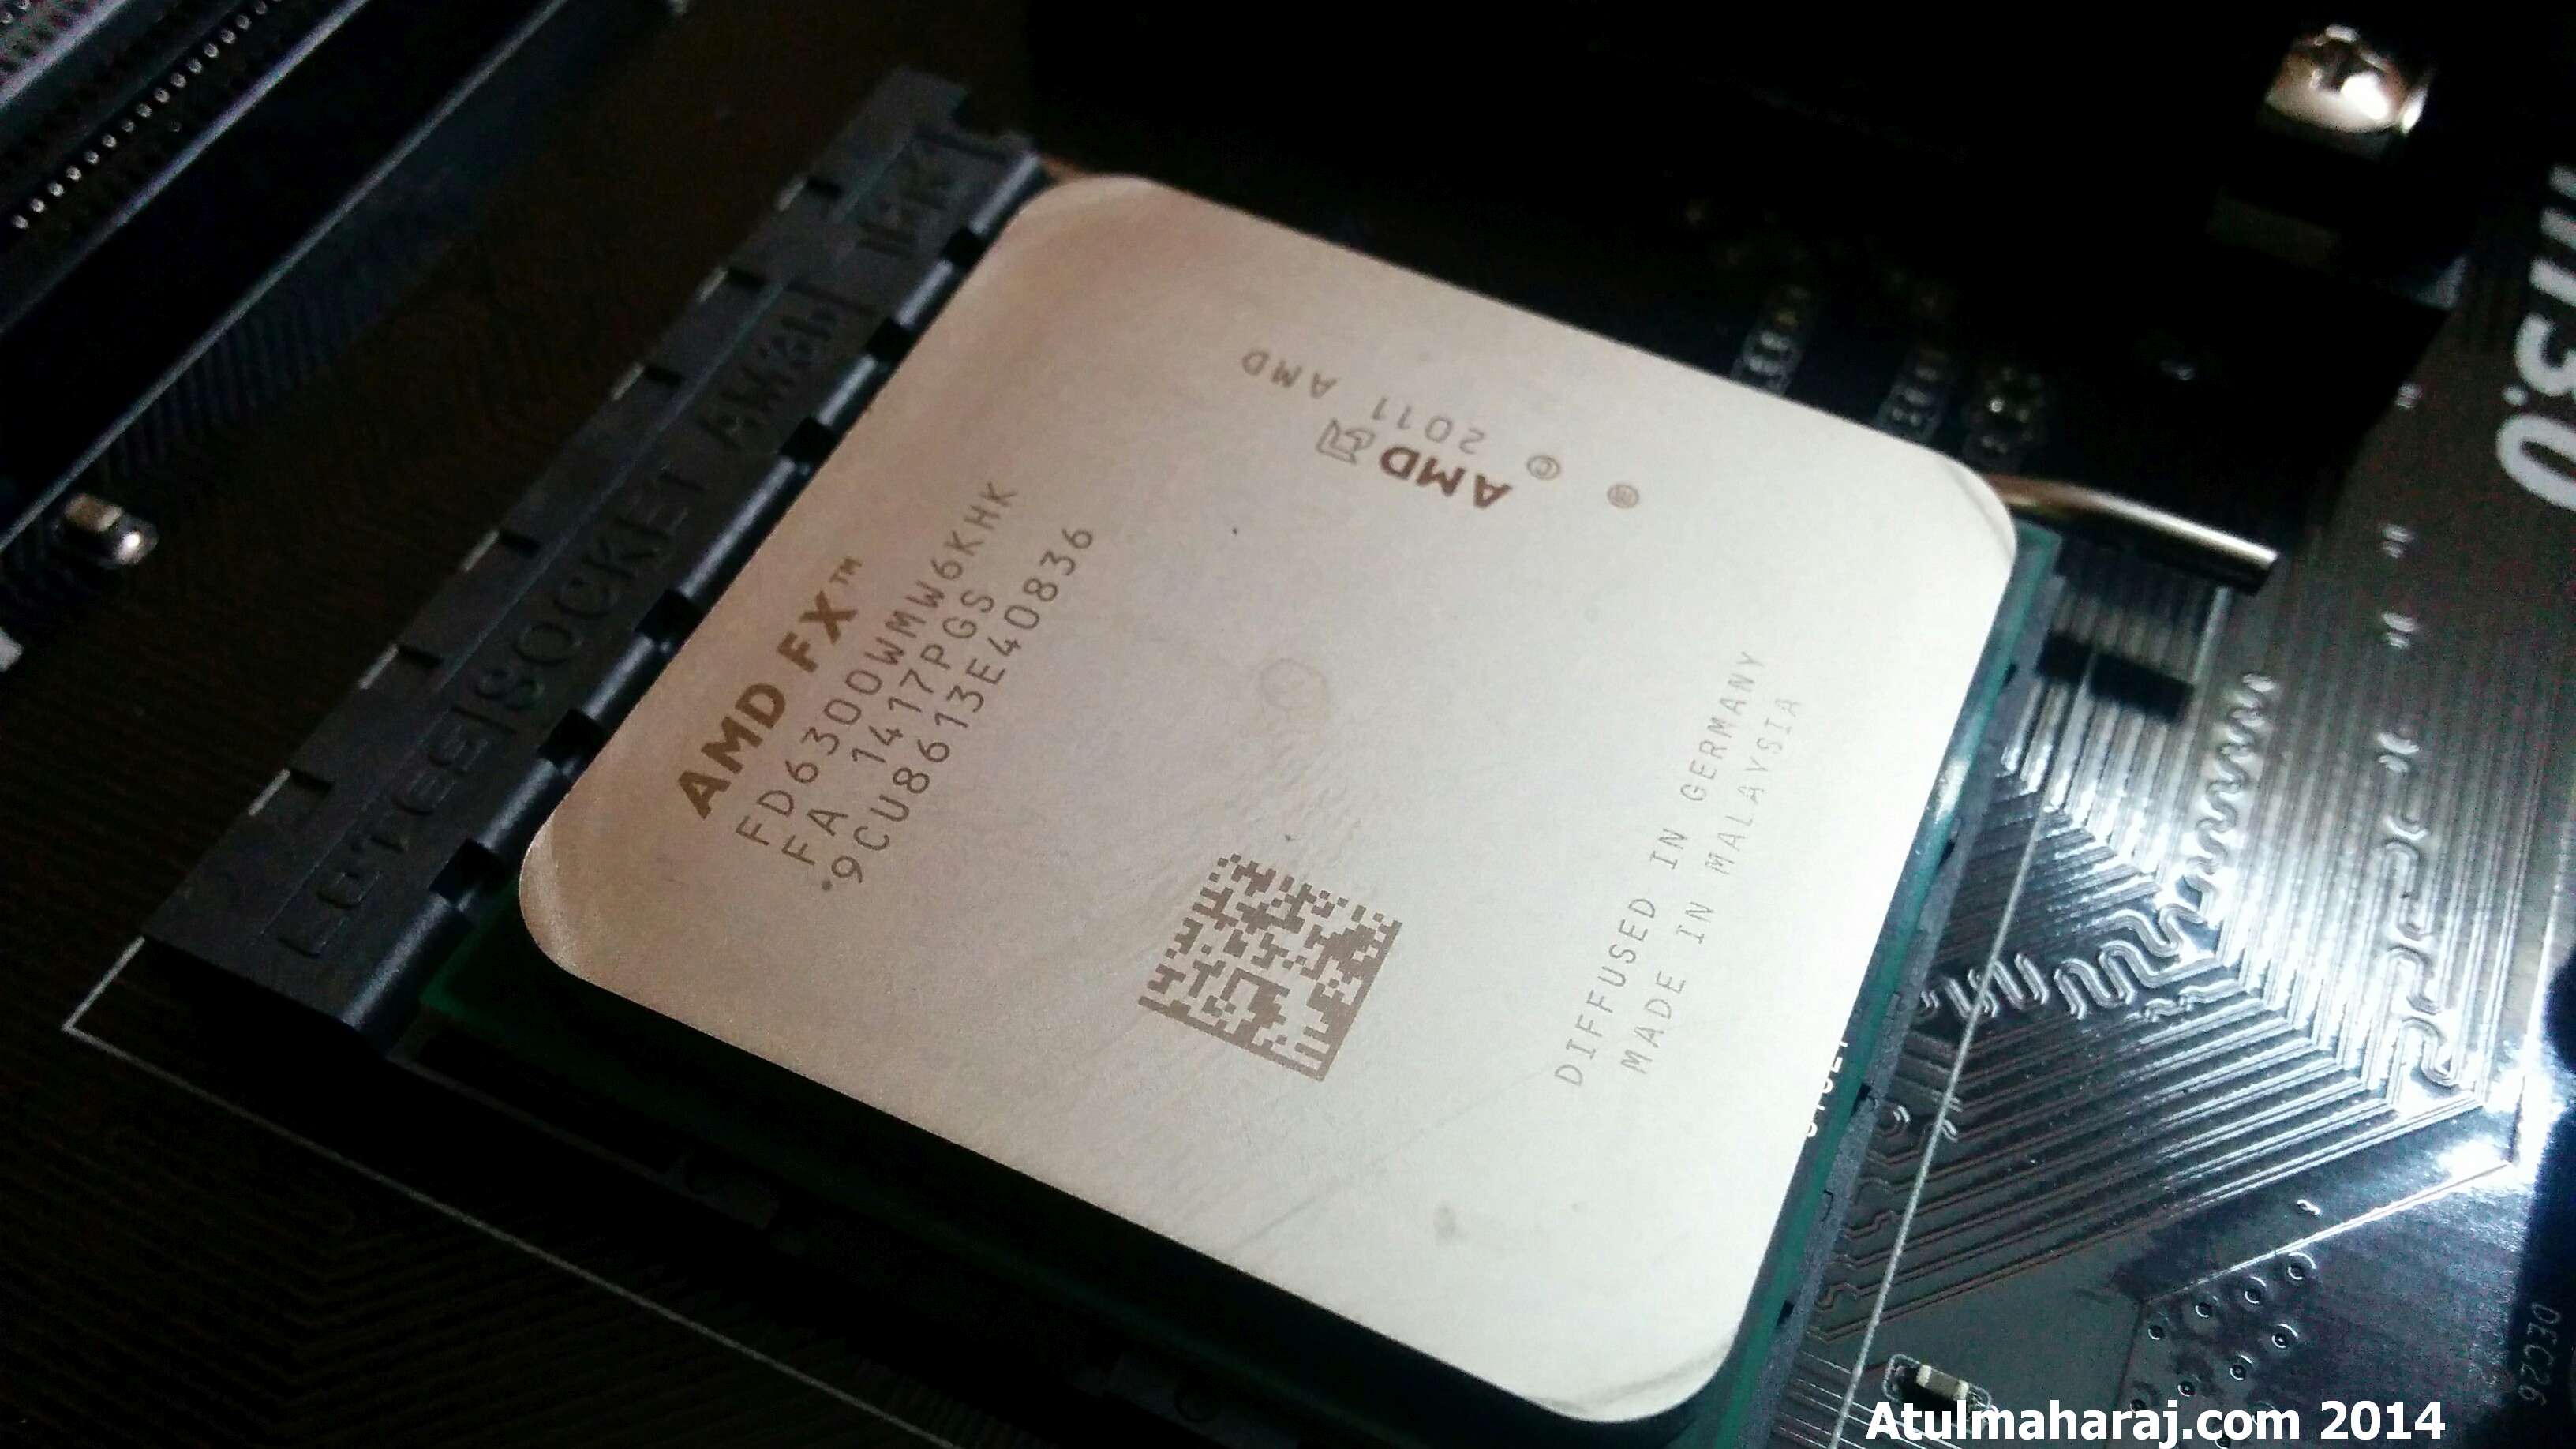 The AMD FX6300 Unlocked Processor